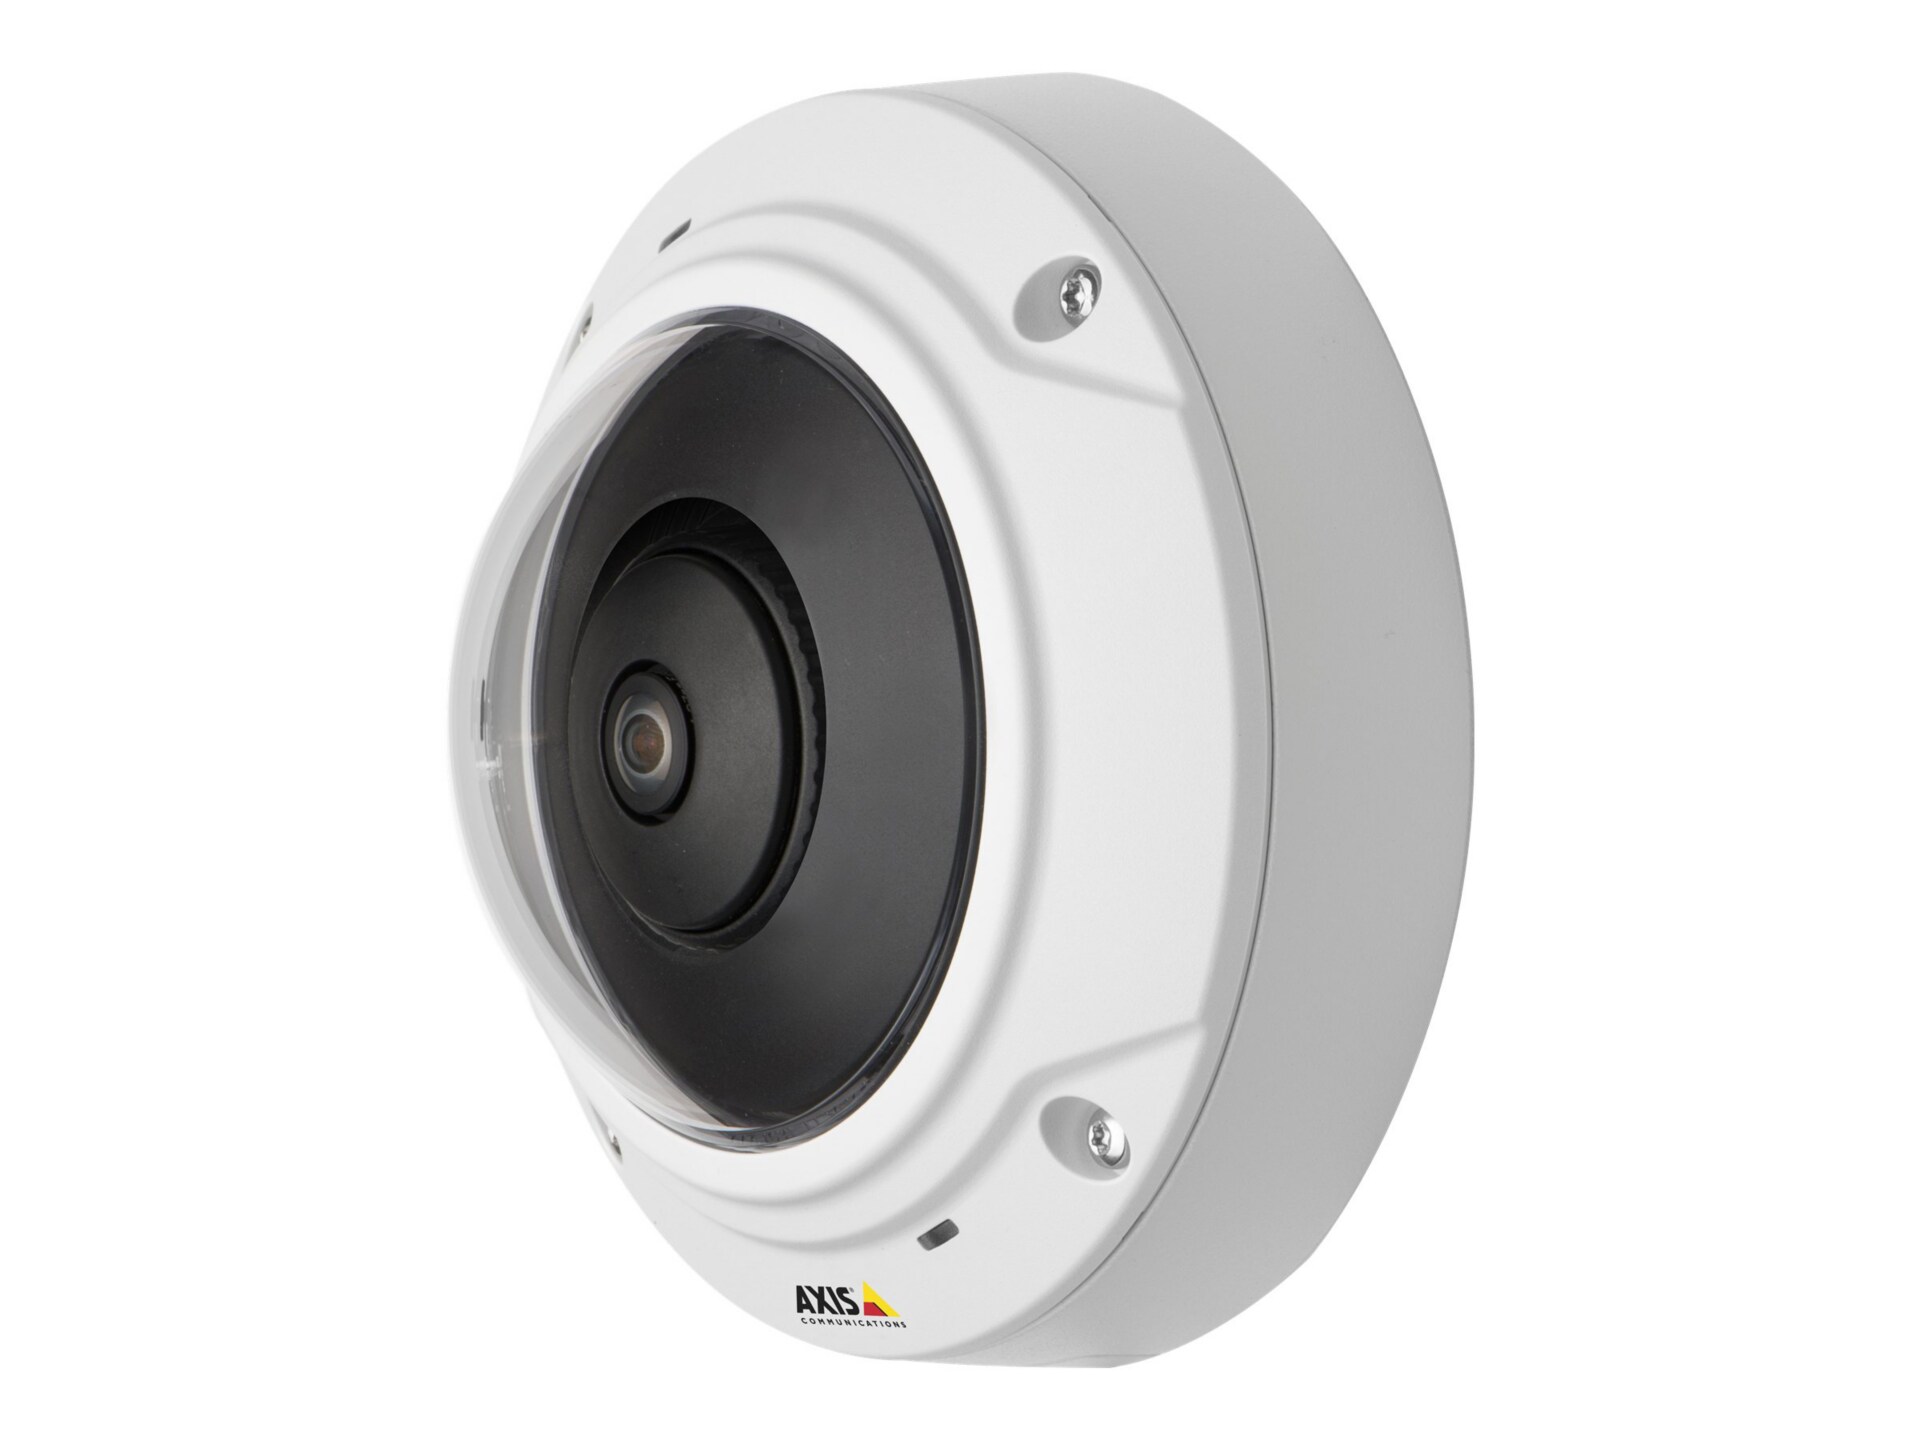 AXIS M3007-PV Network Camera - network surveillance camera